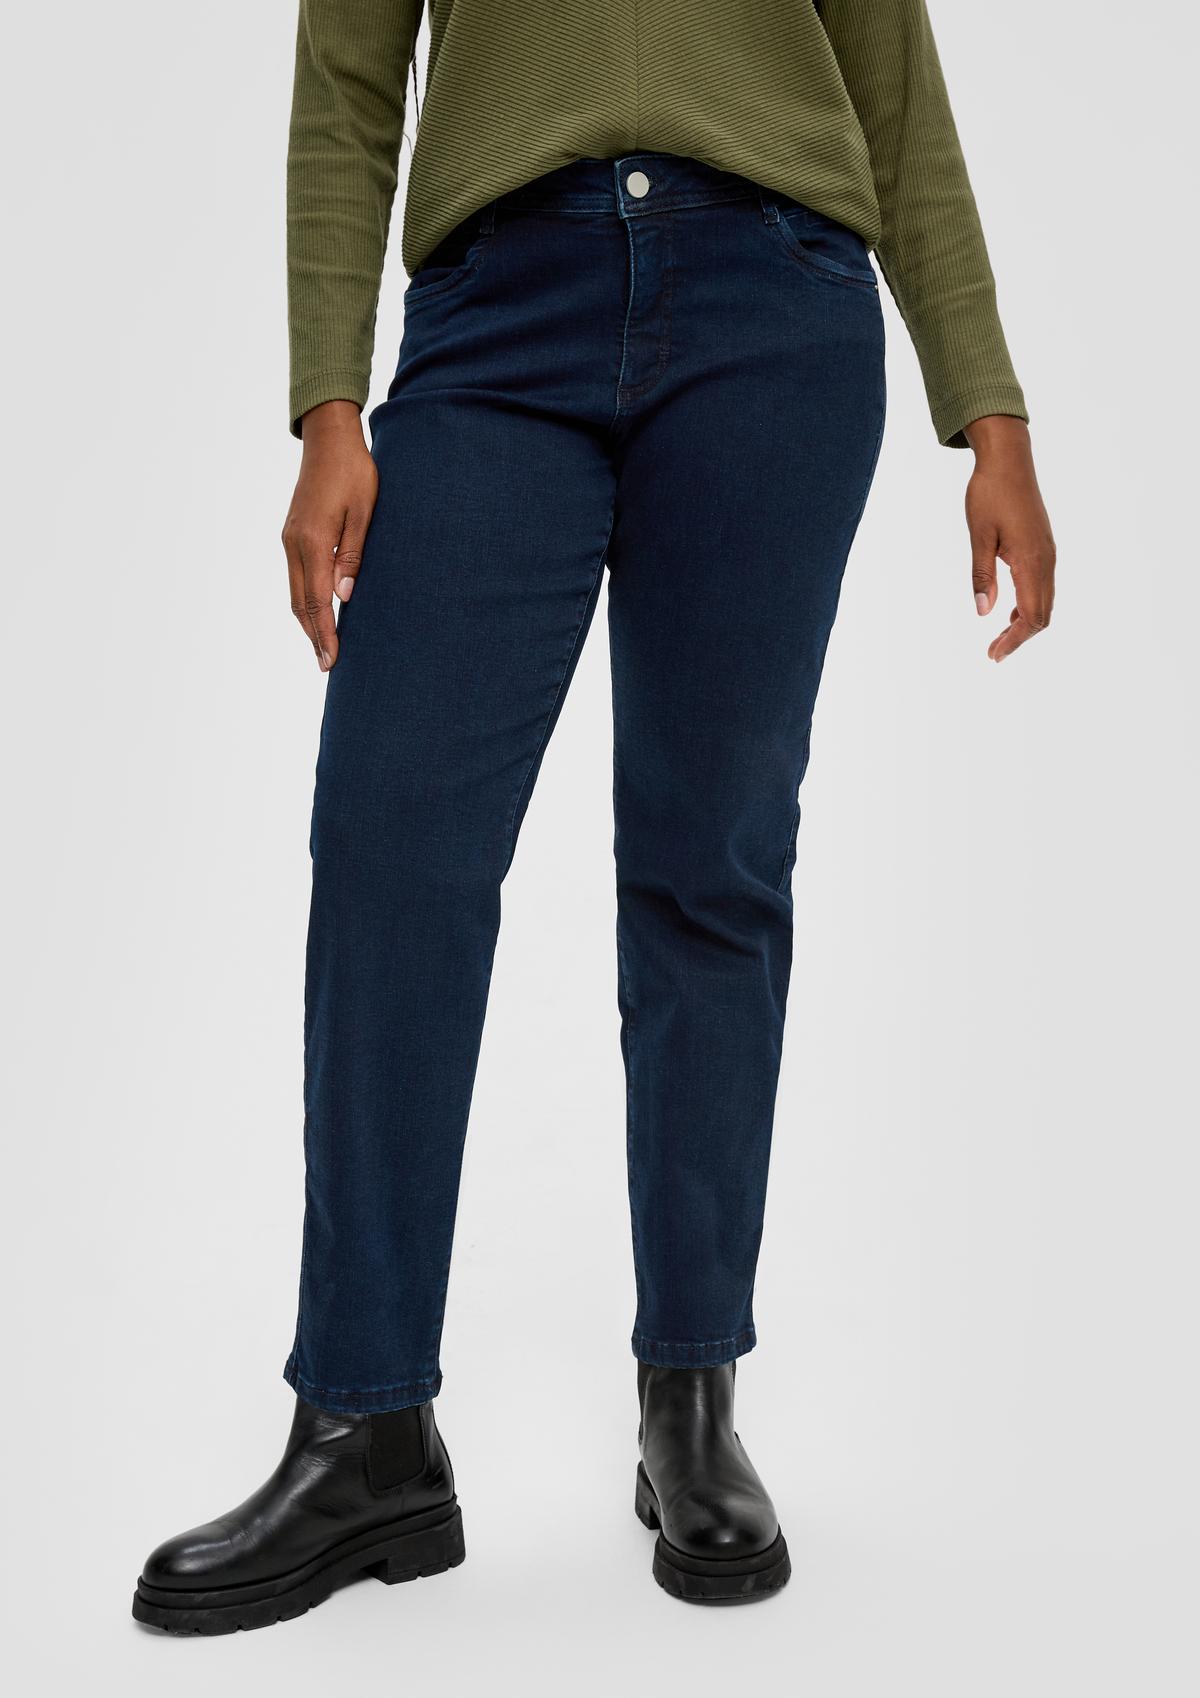 Curvy jeans / regular fit / mid rise / slim leg